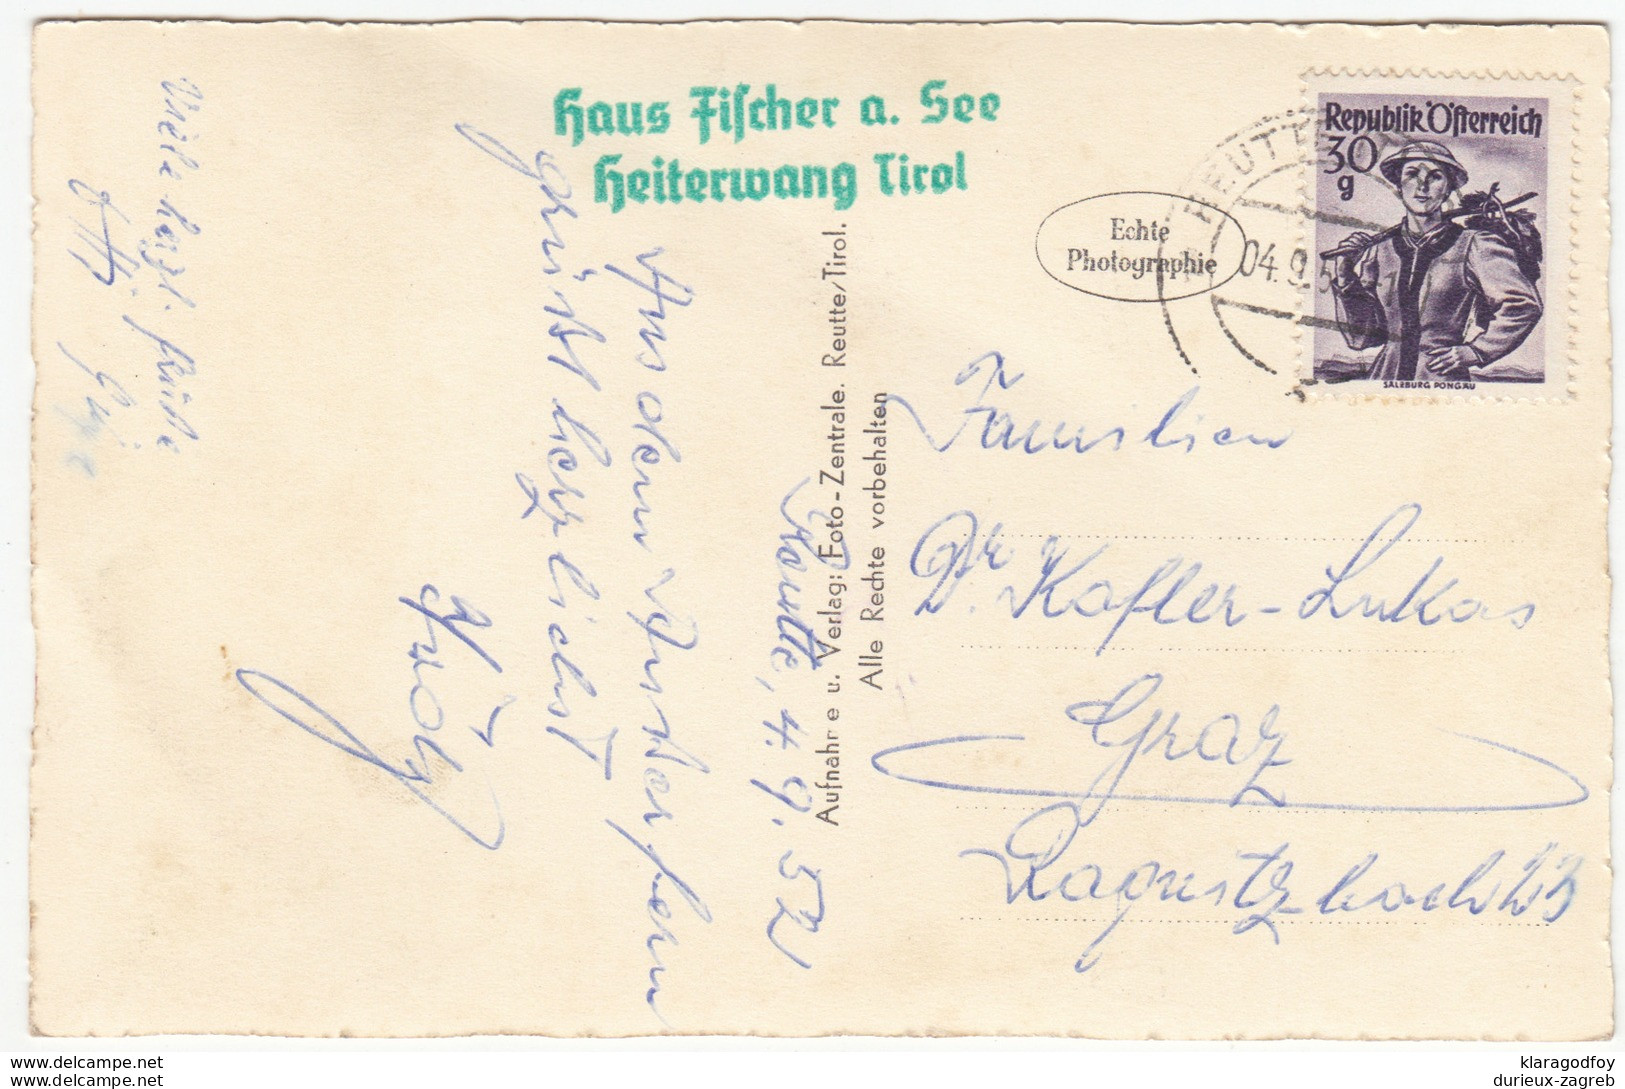 Plansee Bei Reutte In Tirol Old Postcard Travelled 1952 B170915 - Reutte